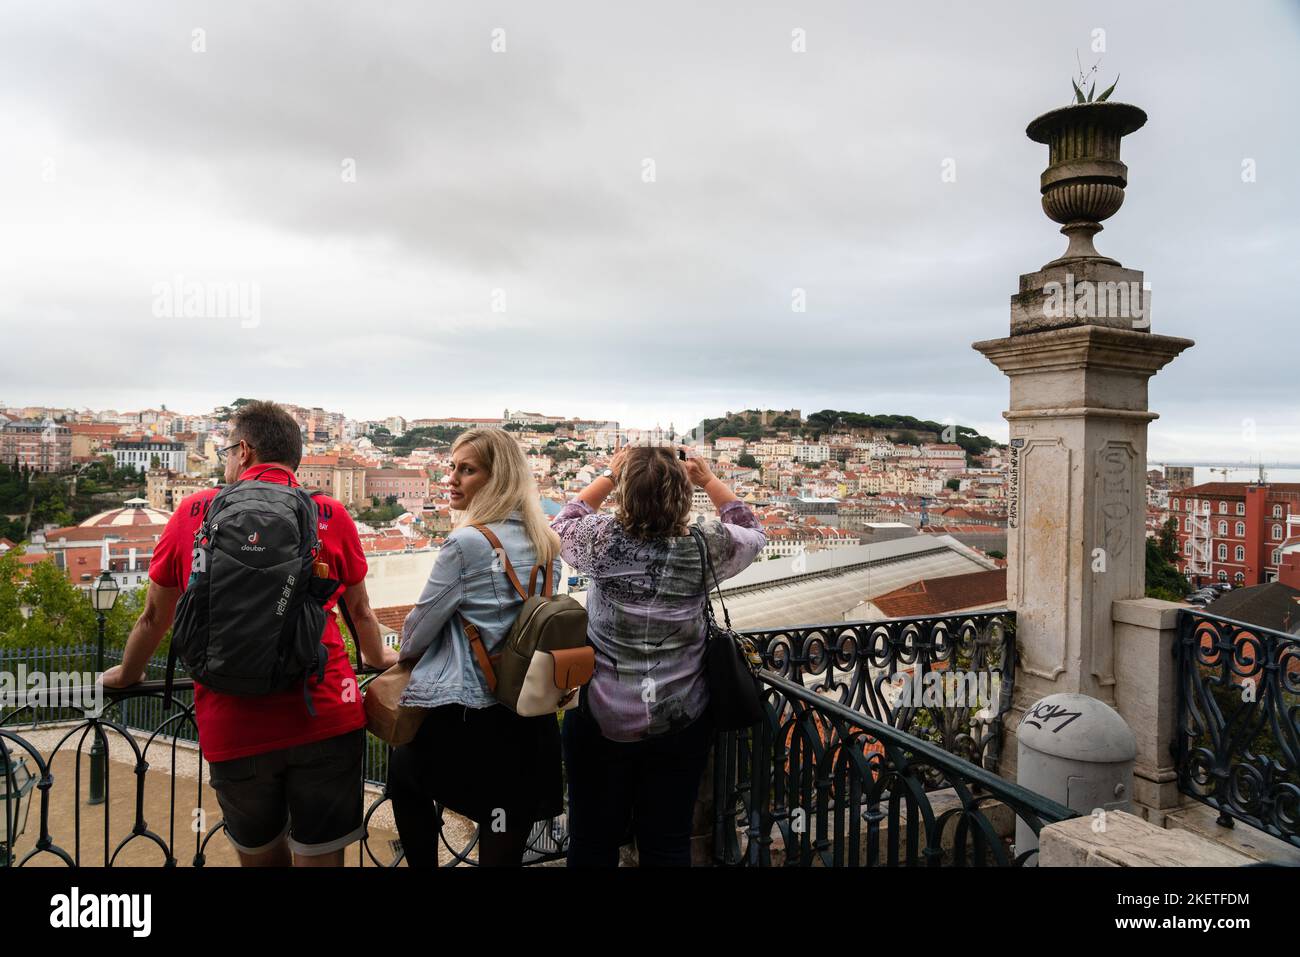 Tourists at the Miradouro de São Pedro de Alcântara in Lisbon, Portugal. This large terraced mirador offers panoramic views of the city. Stock Photo